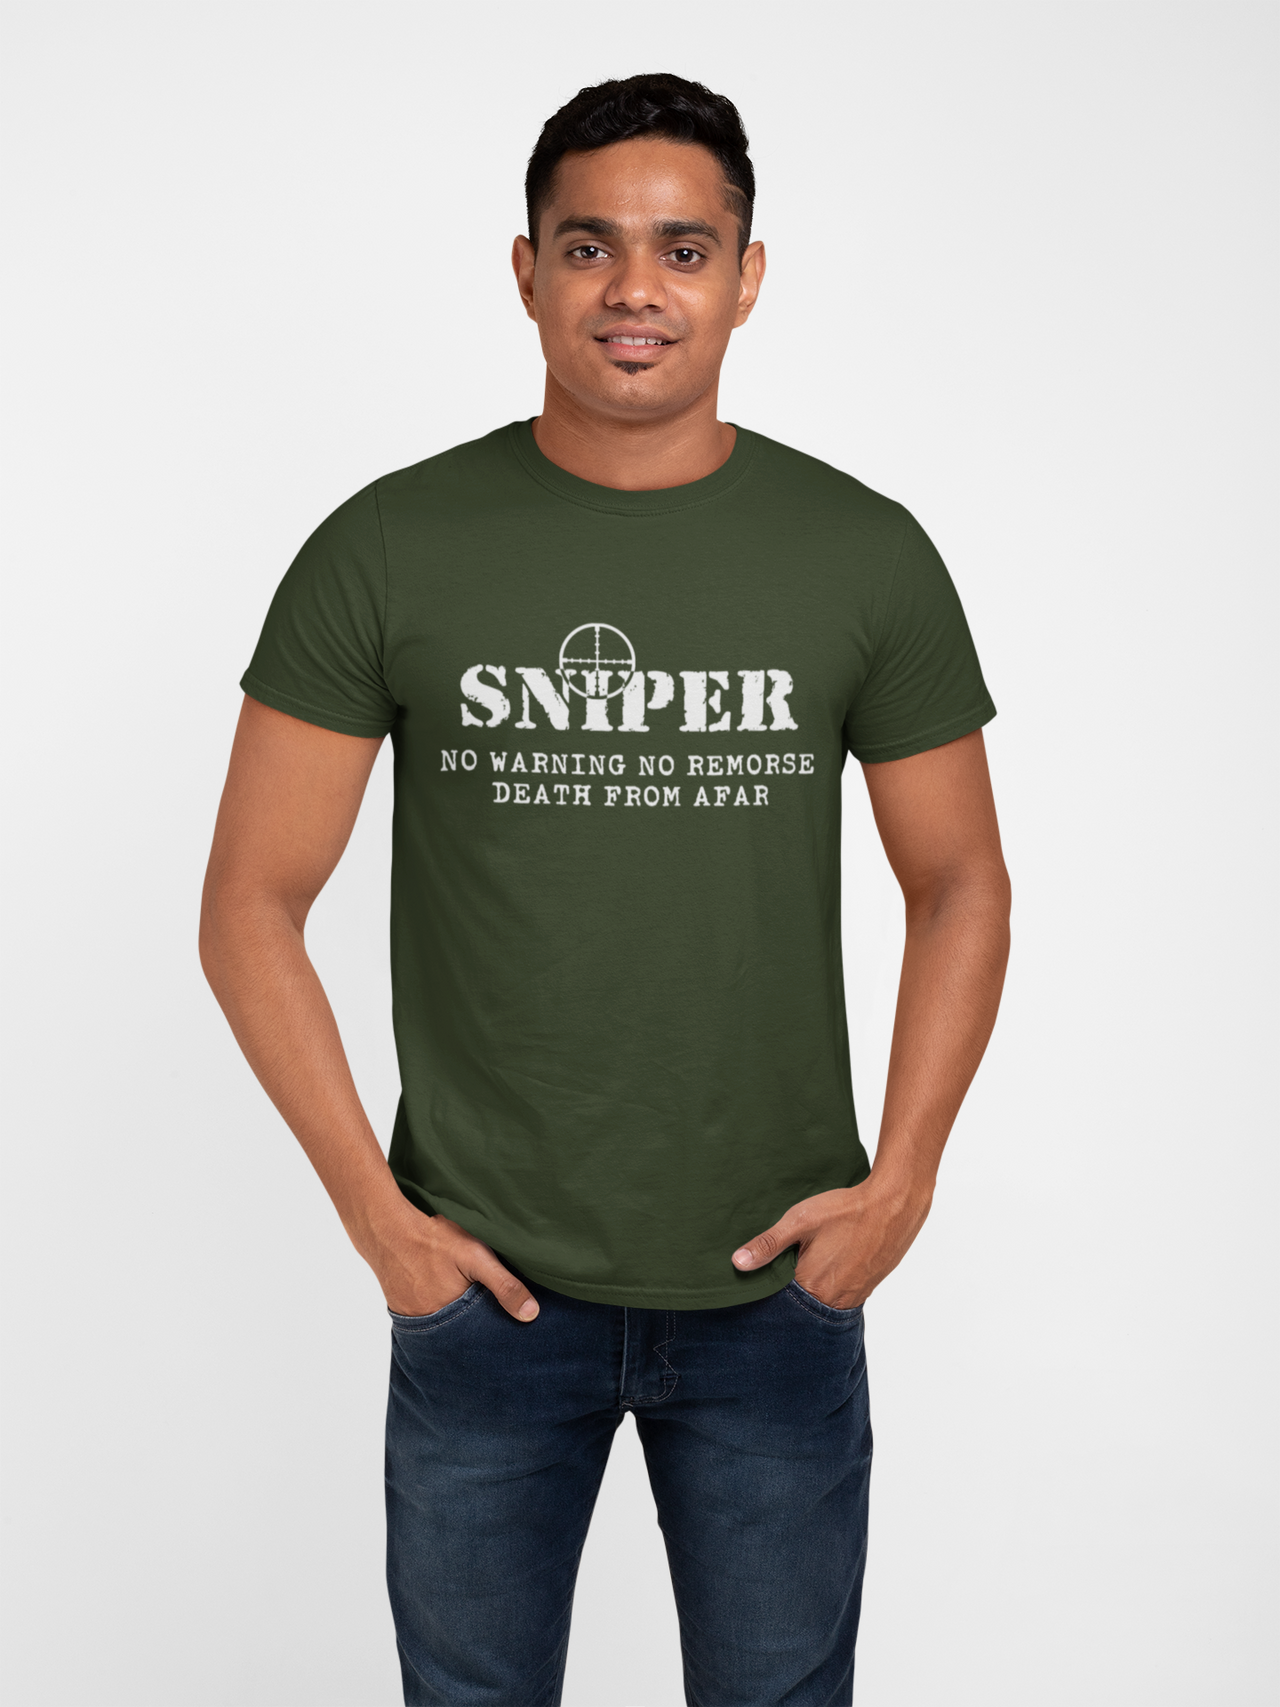 Sniper T-shirt - Sniper, No Warning, No Remorse..... (Men)